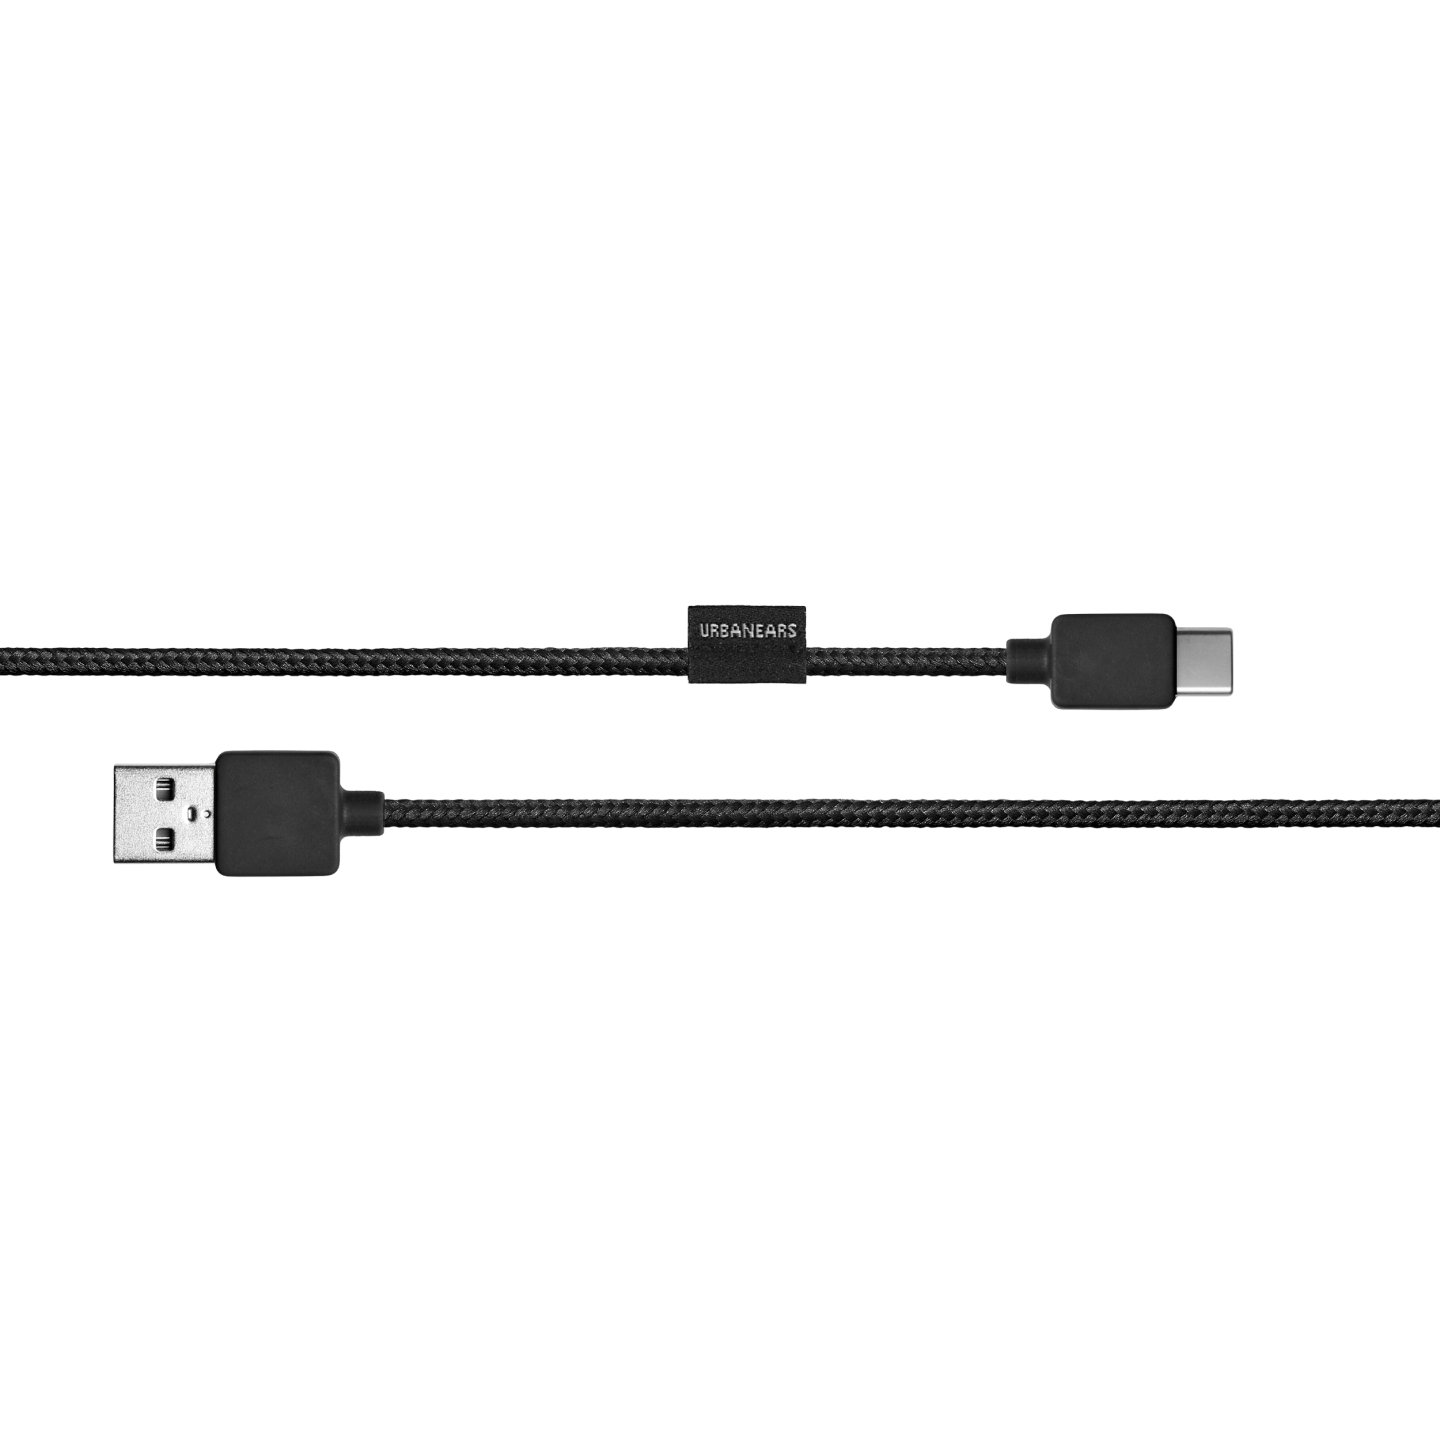 Cable USB-C a Lightning (1m) de Next One